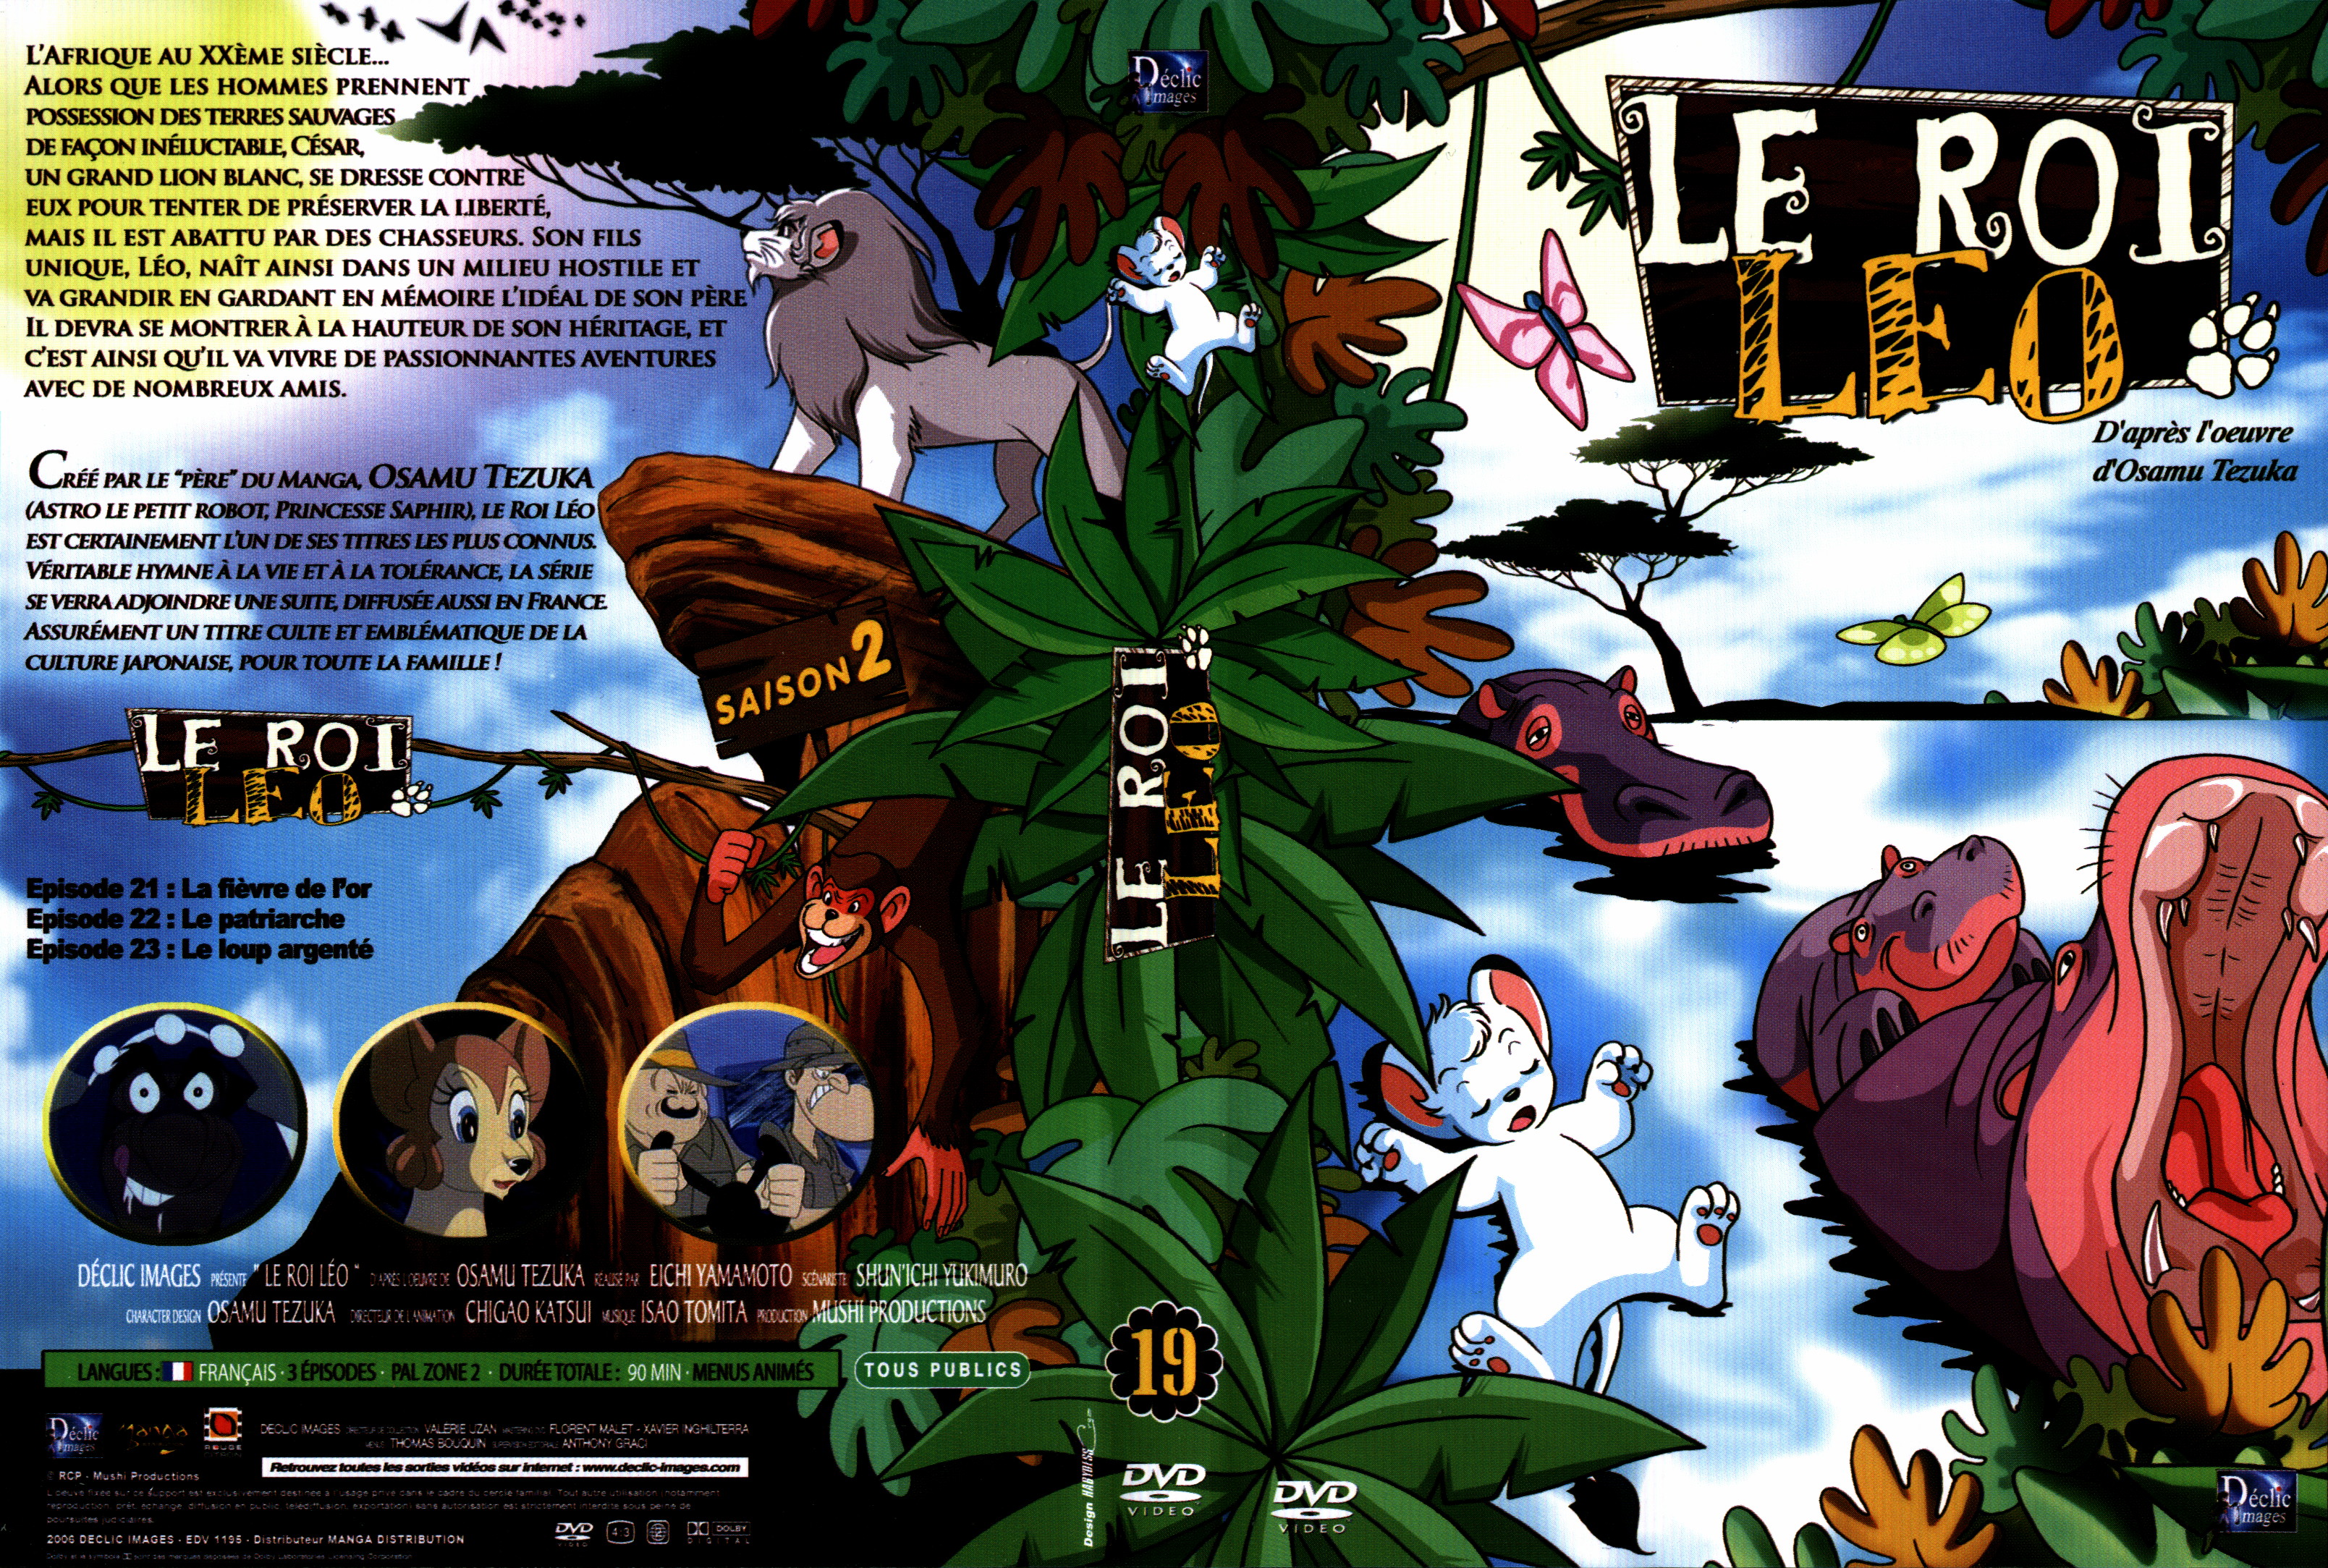 Jaquette DVD Le roi Leo vol 19